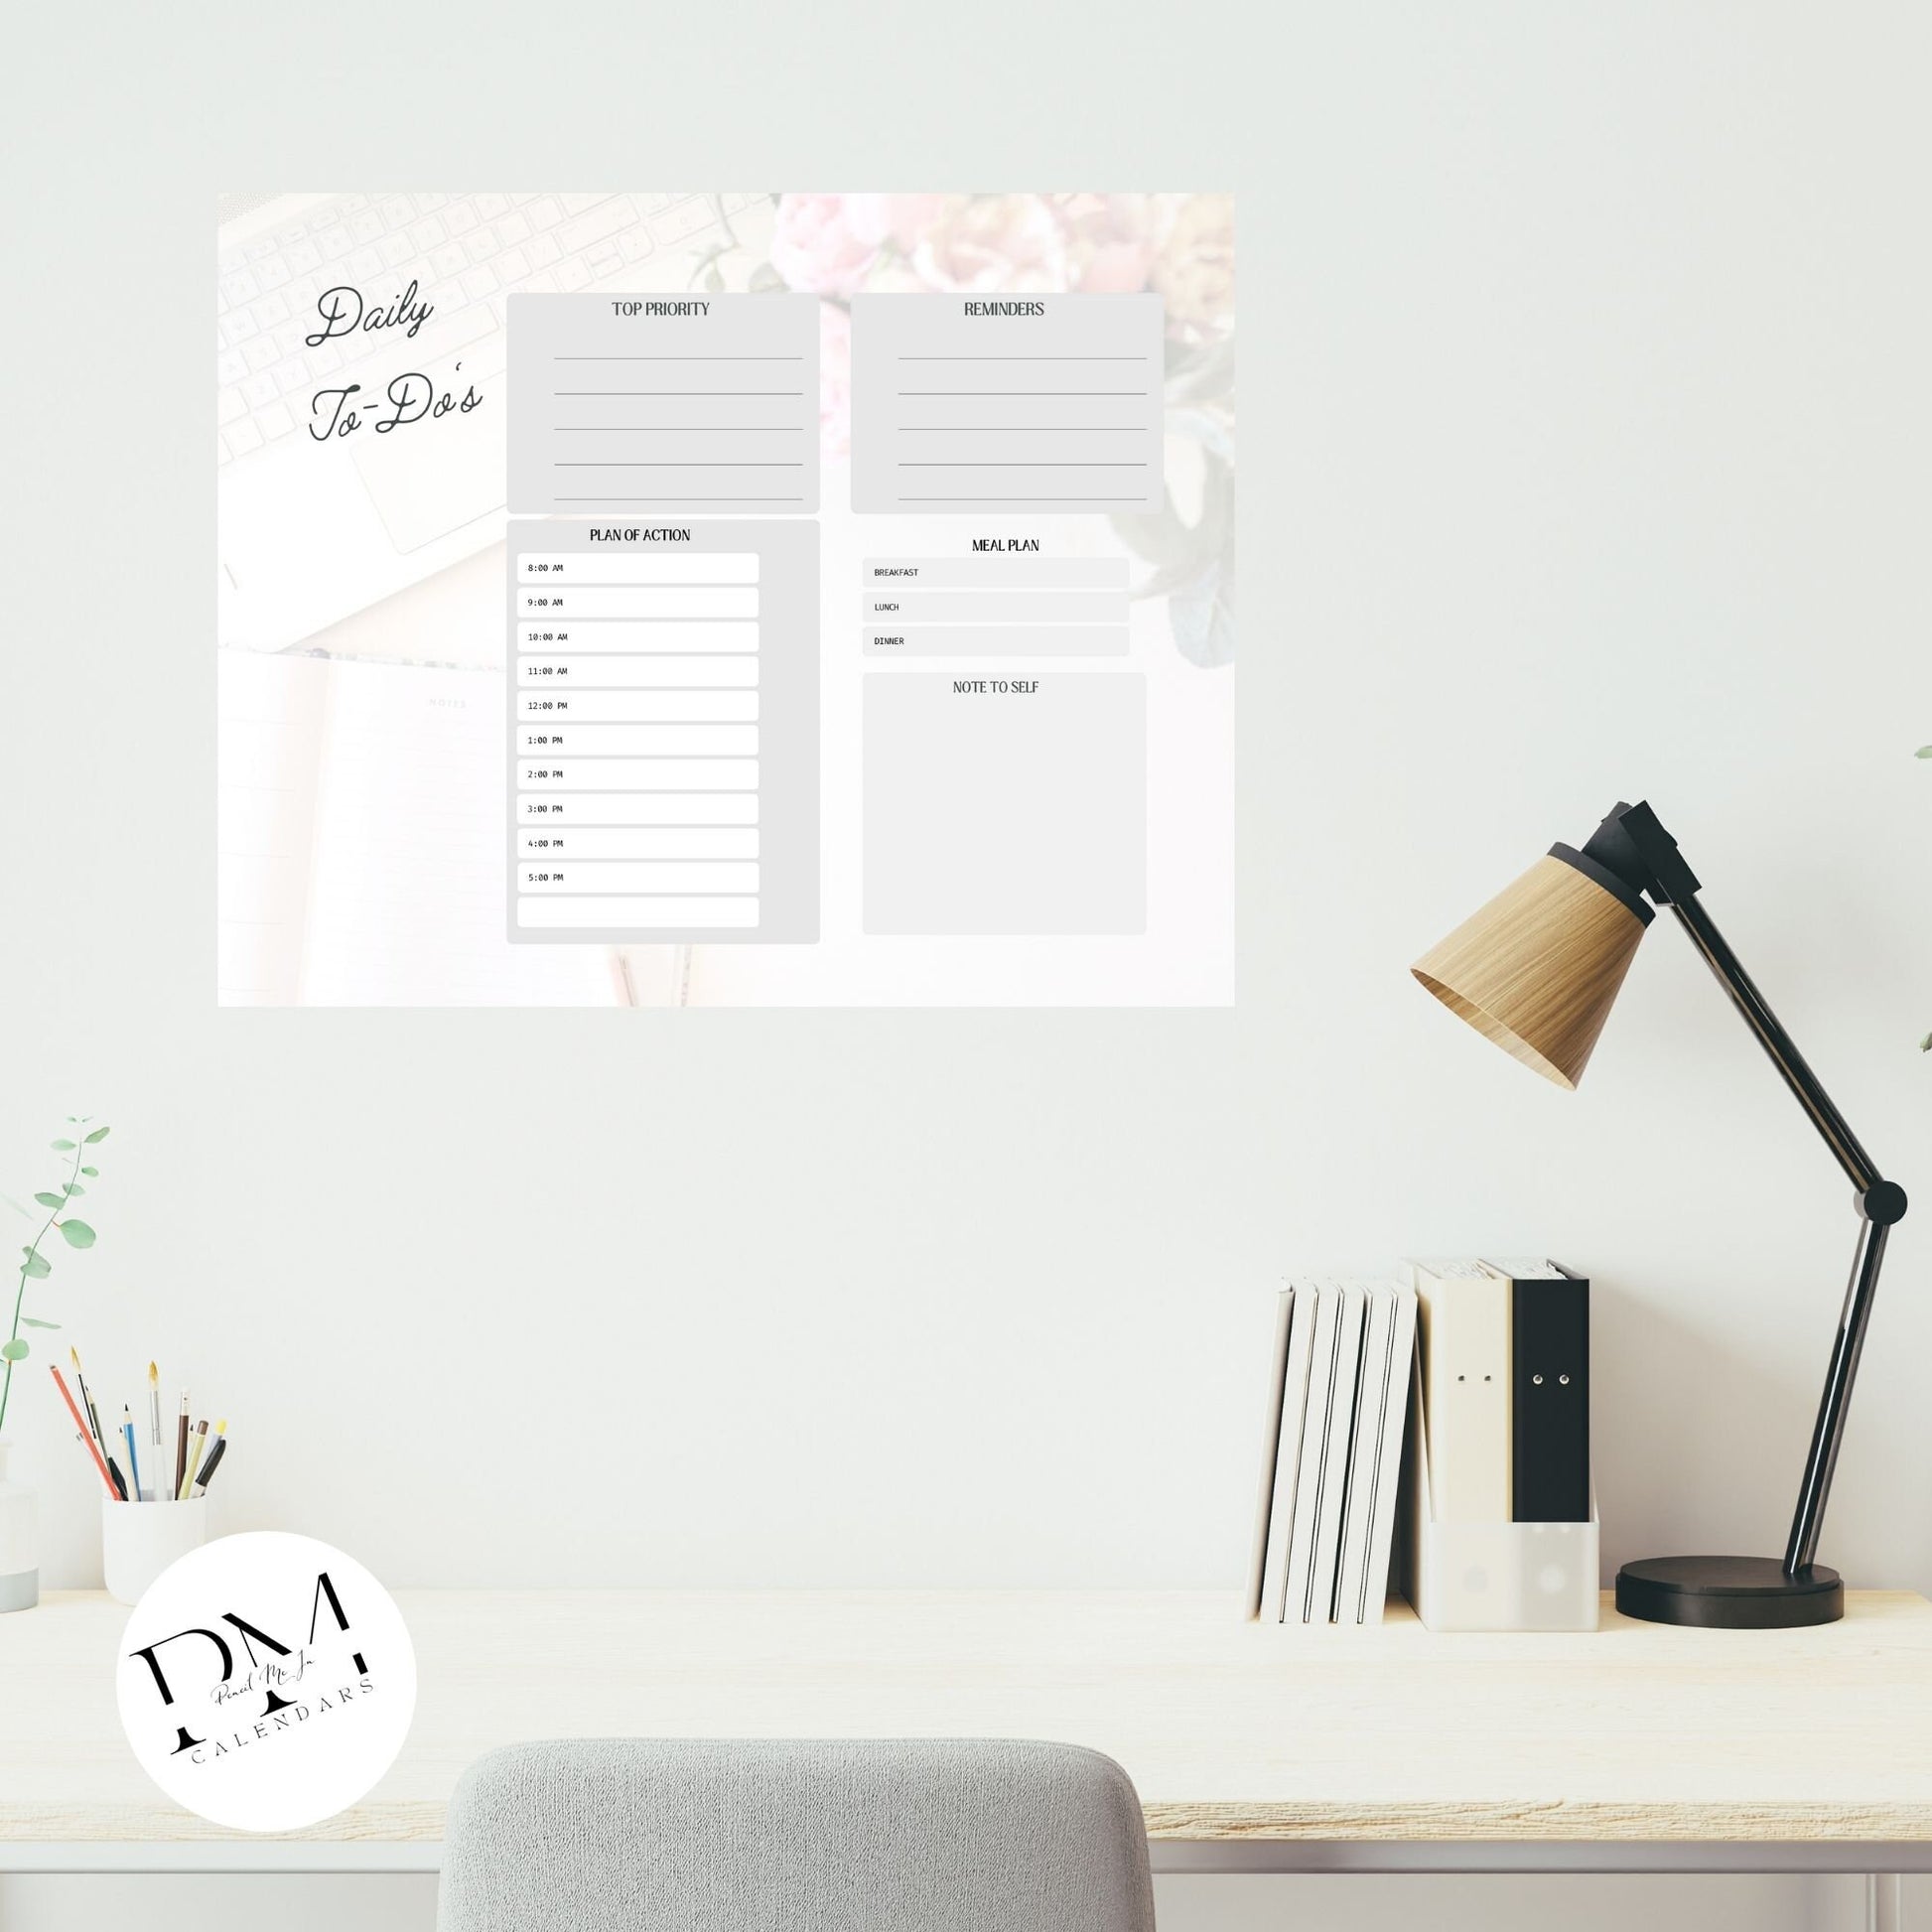 Acrylic Wall Calendar, Acrylic Floral Calendar, Daily Tasks, Acrylic Daily Planner, Task List Planner, Daily Schedule, Day Schedule